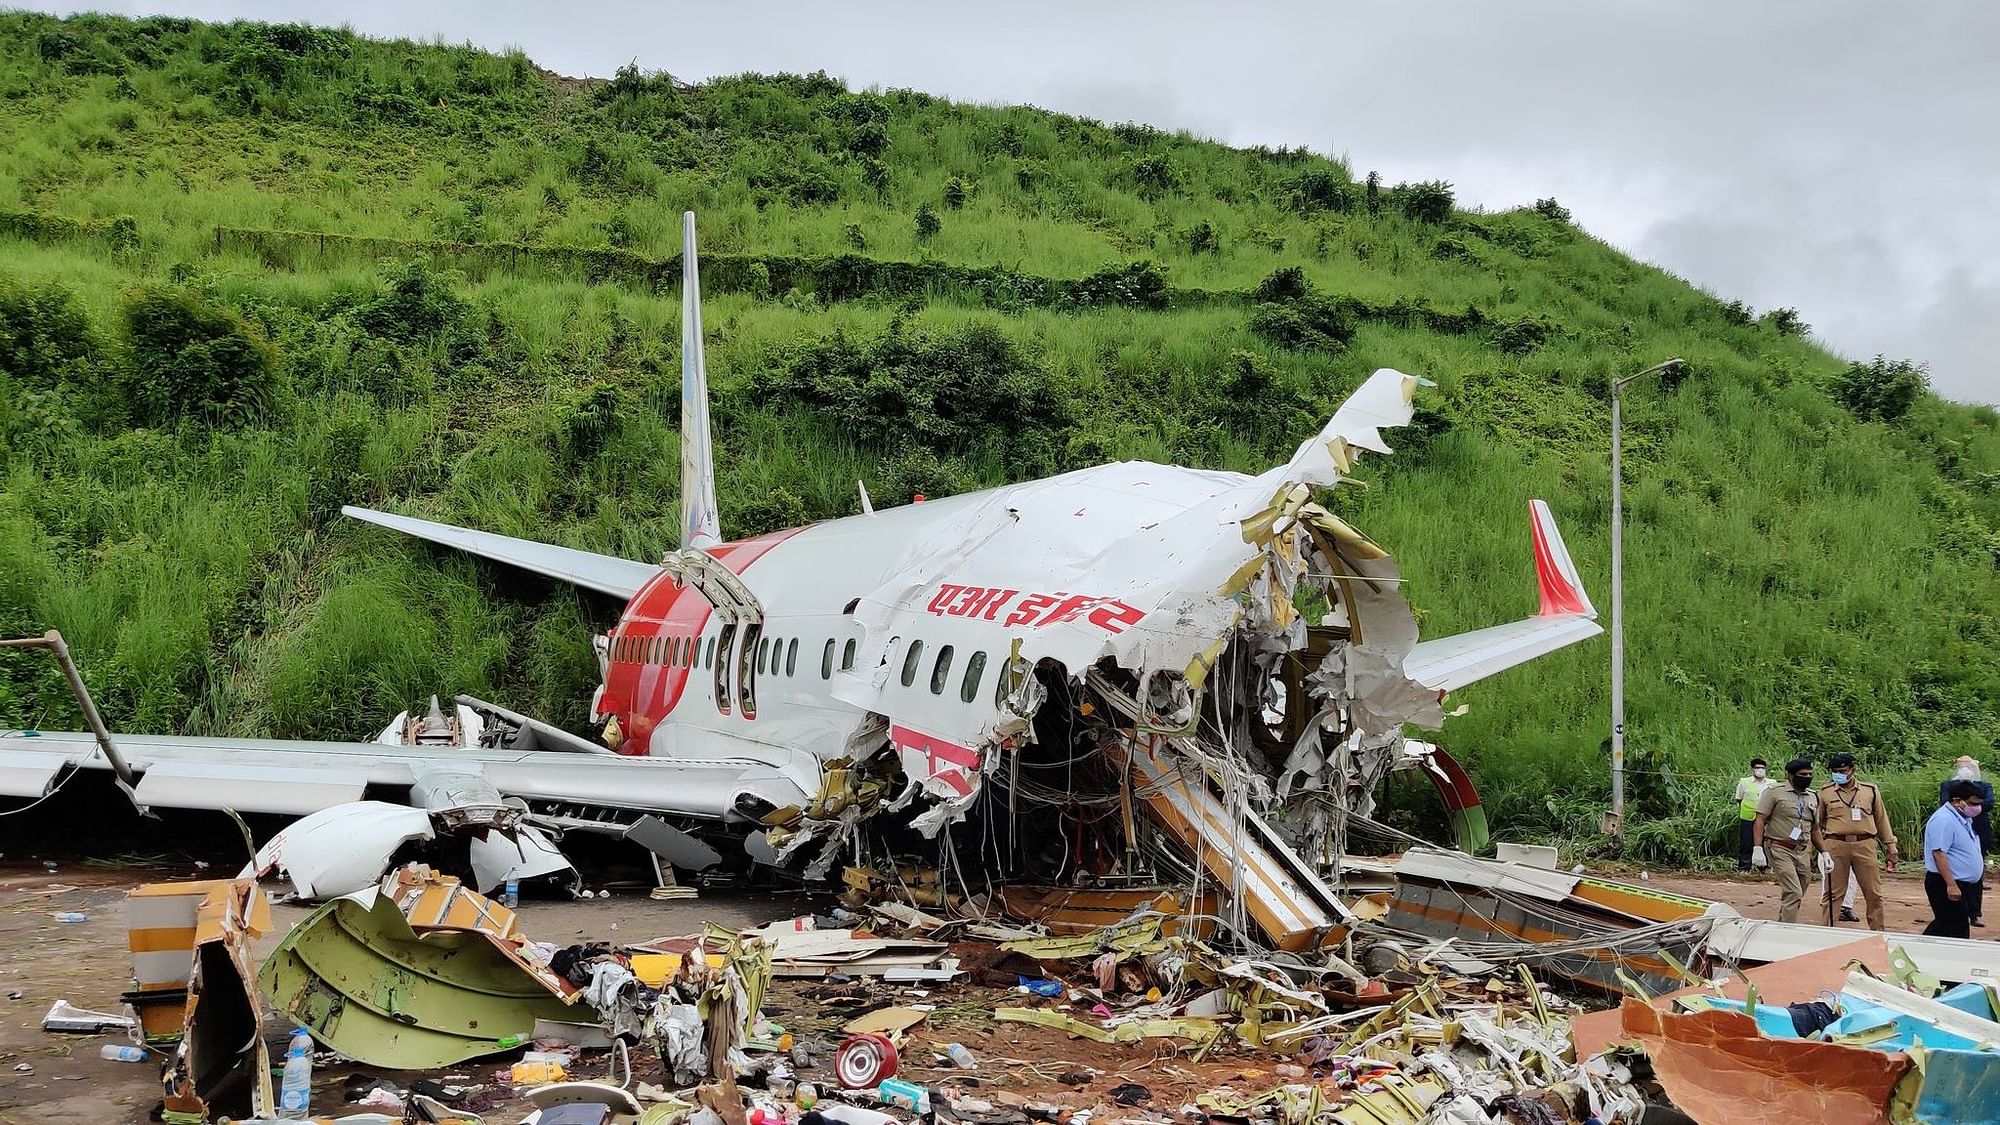 Air India flight (IX-1344) from Dubai carrying 184 passengers skidded during landing at Karipur Airport in Kozhikode, Kerala on Friday, 7 August.